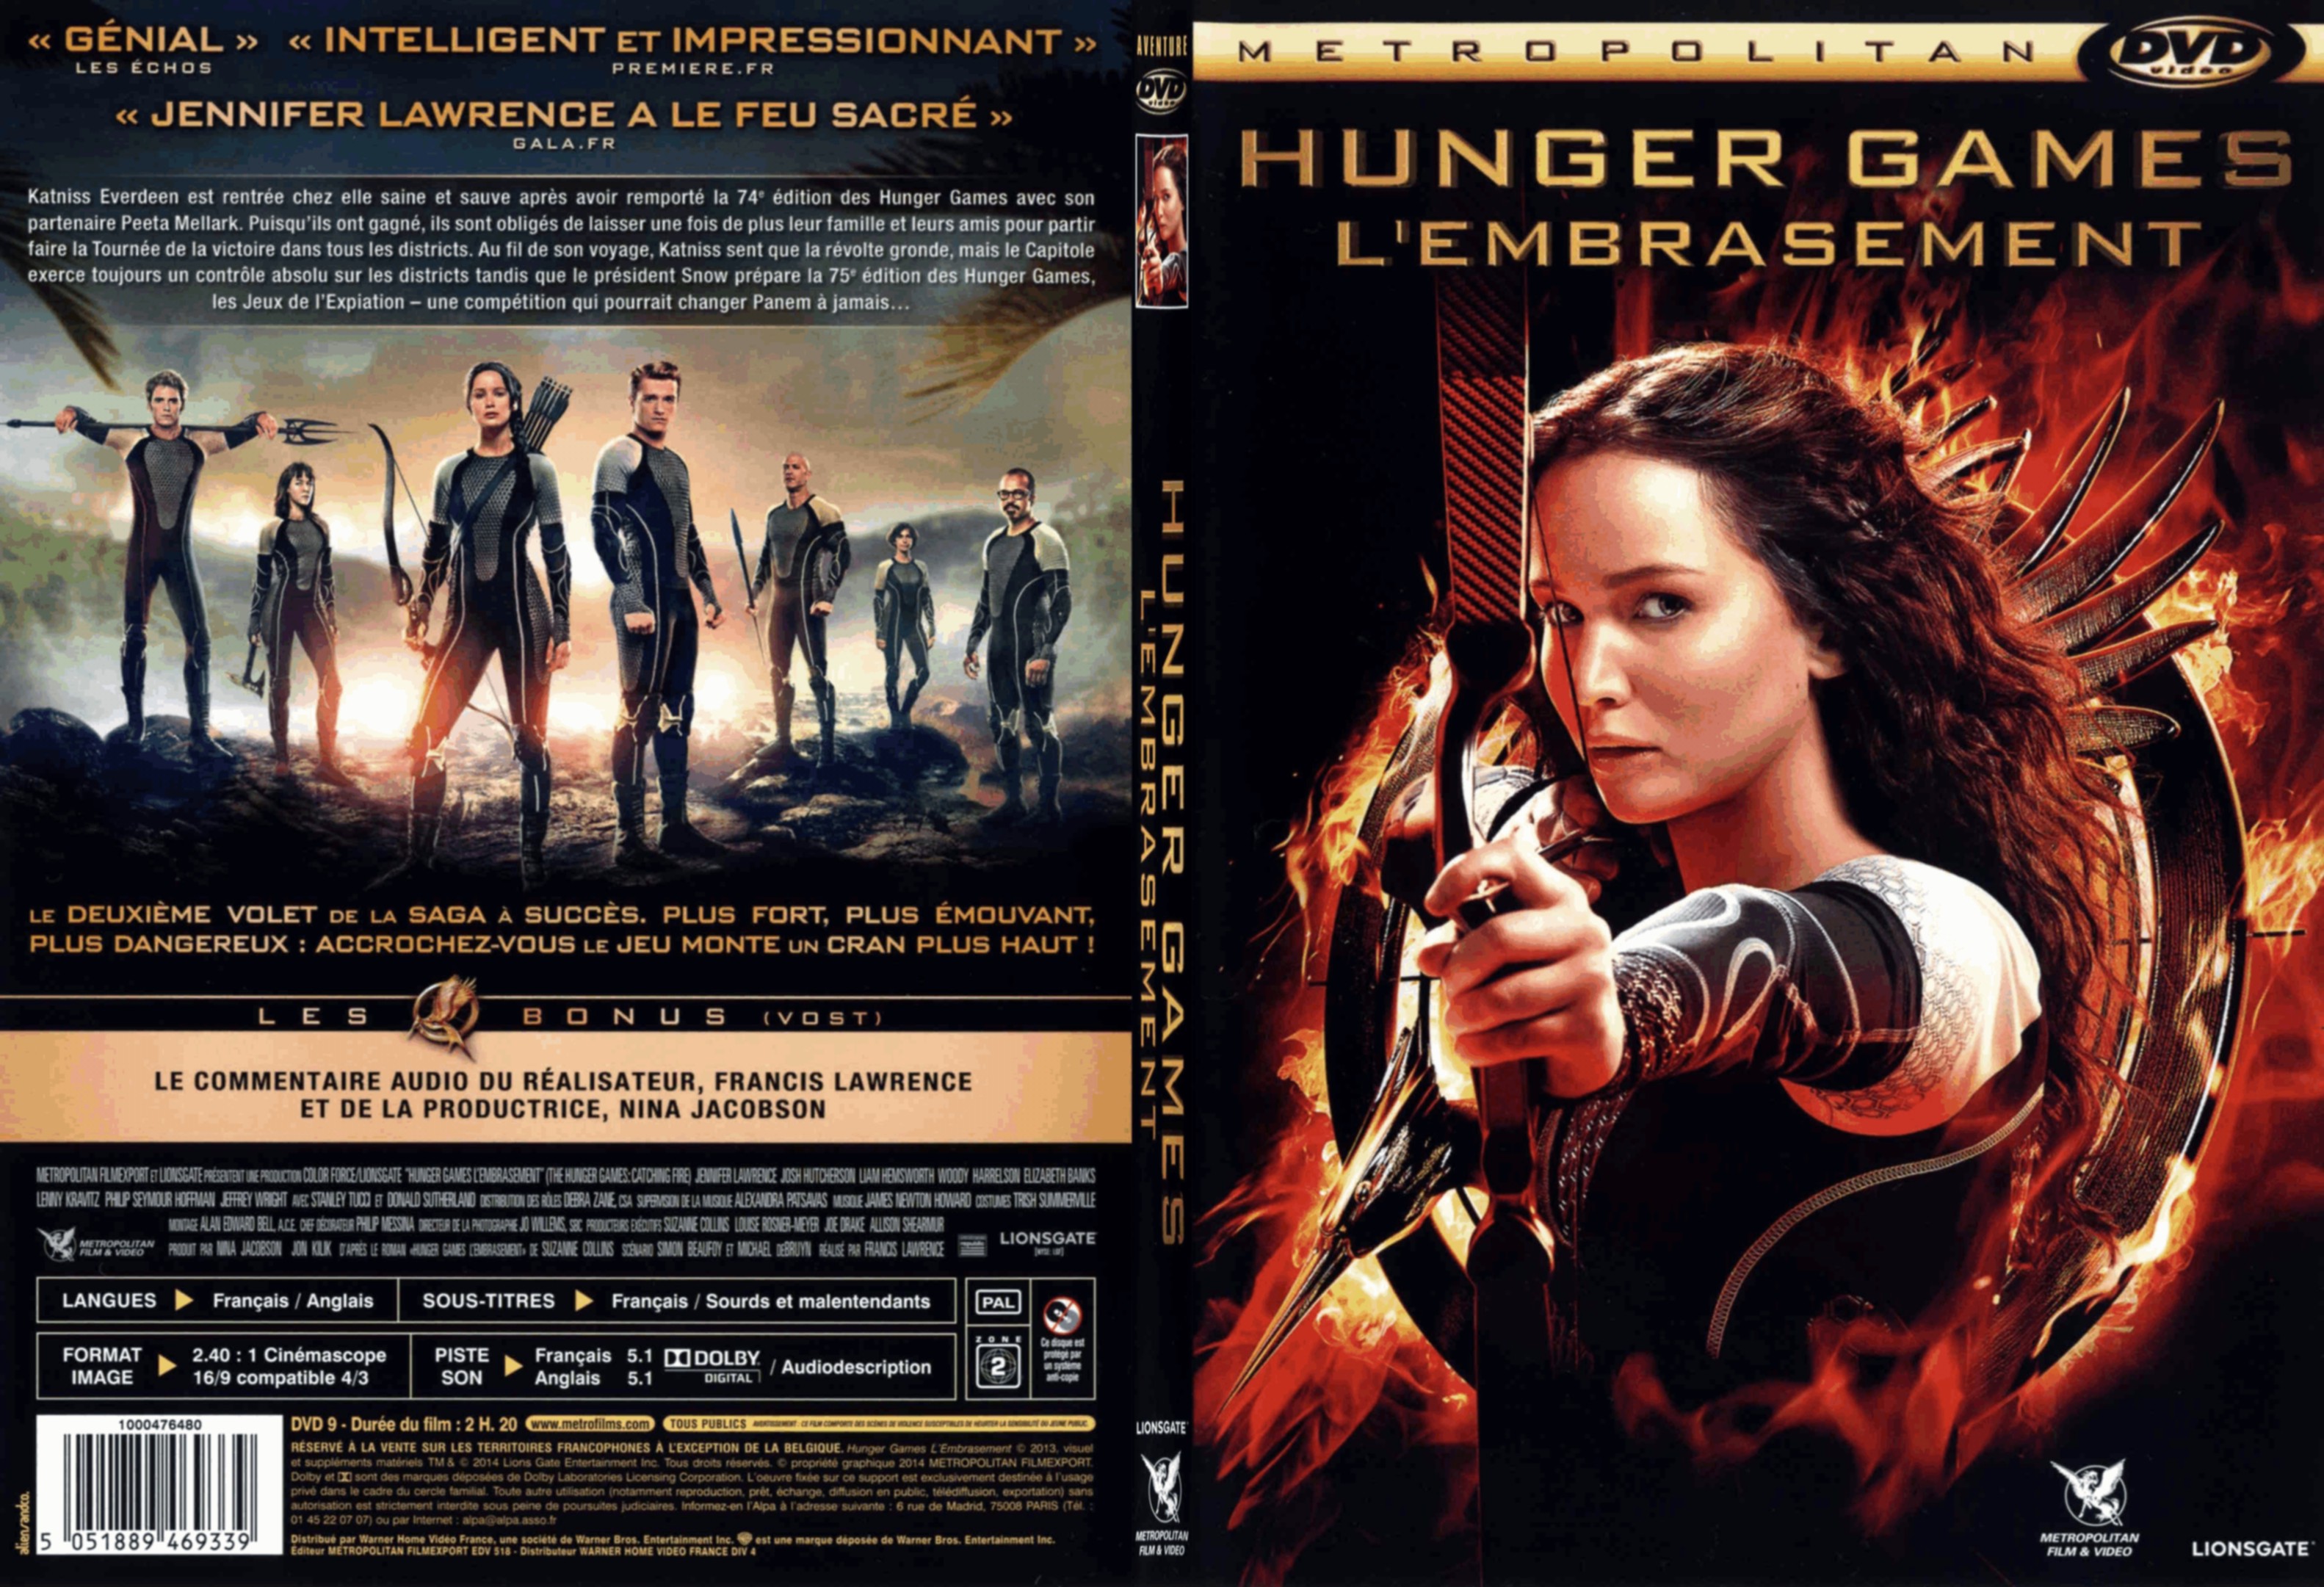 Jaquette DVD Hunger Games L